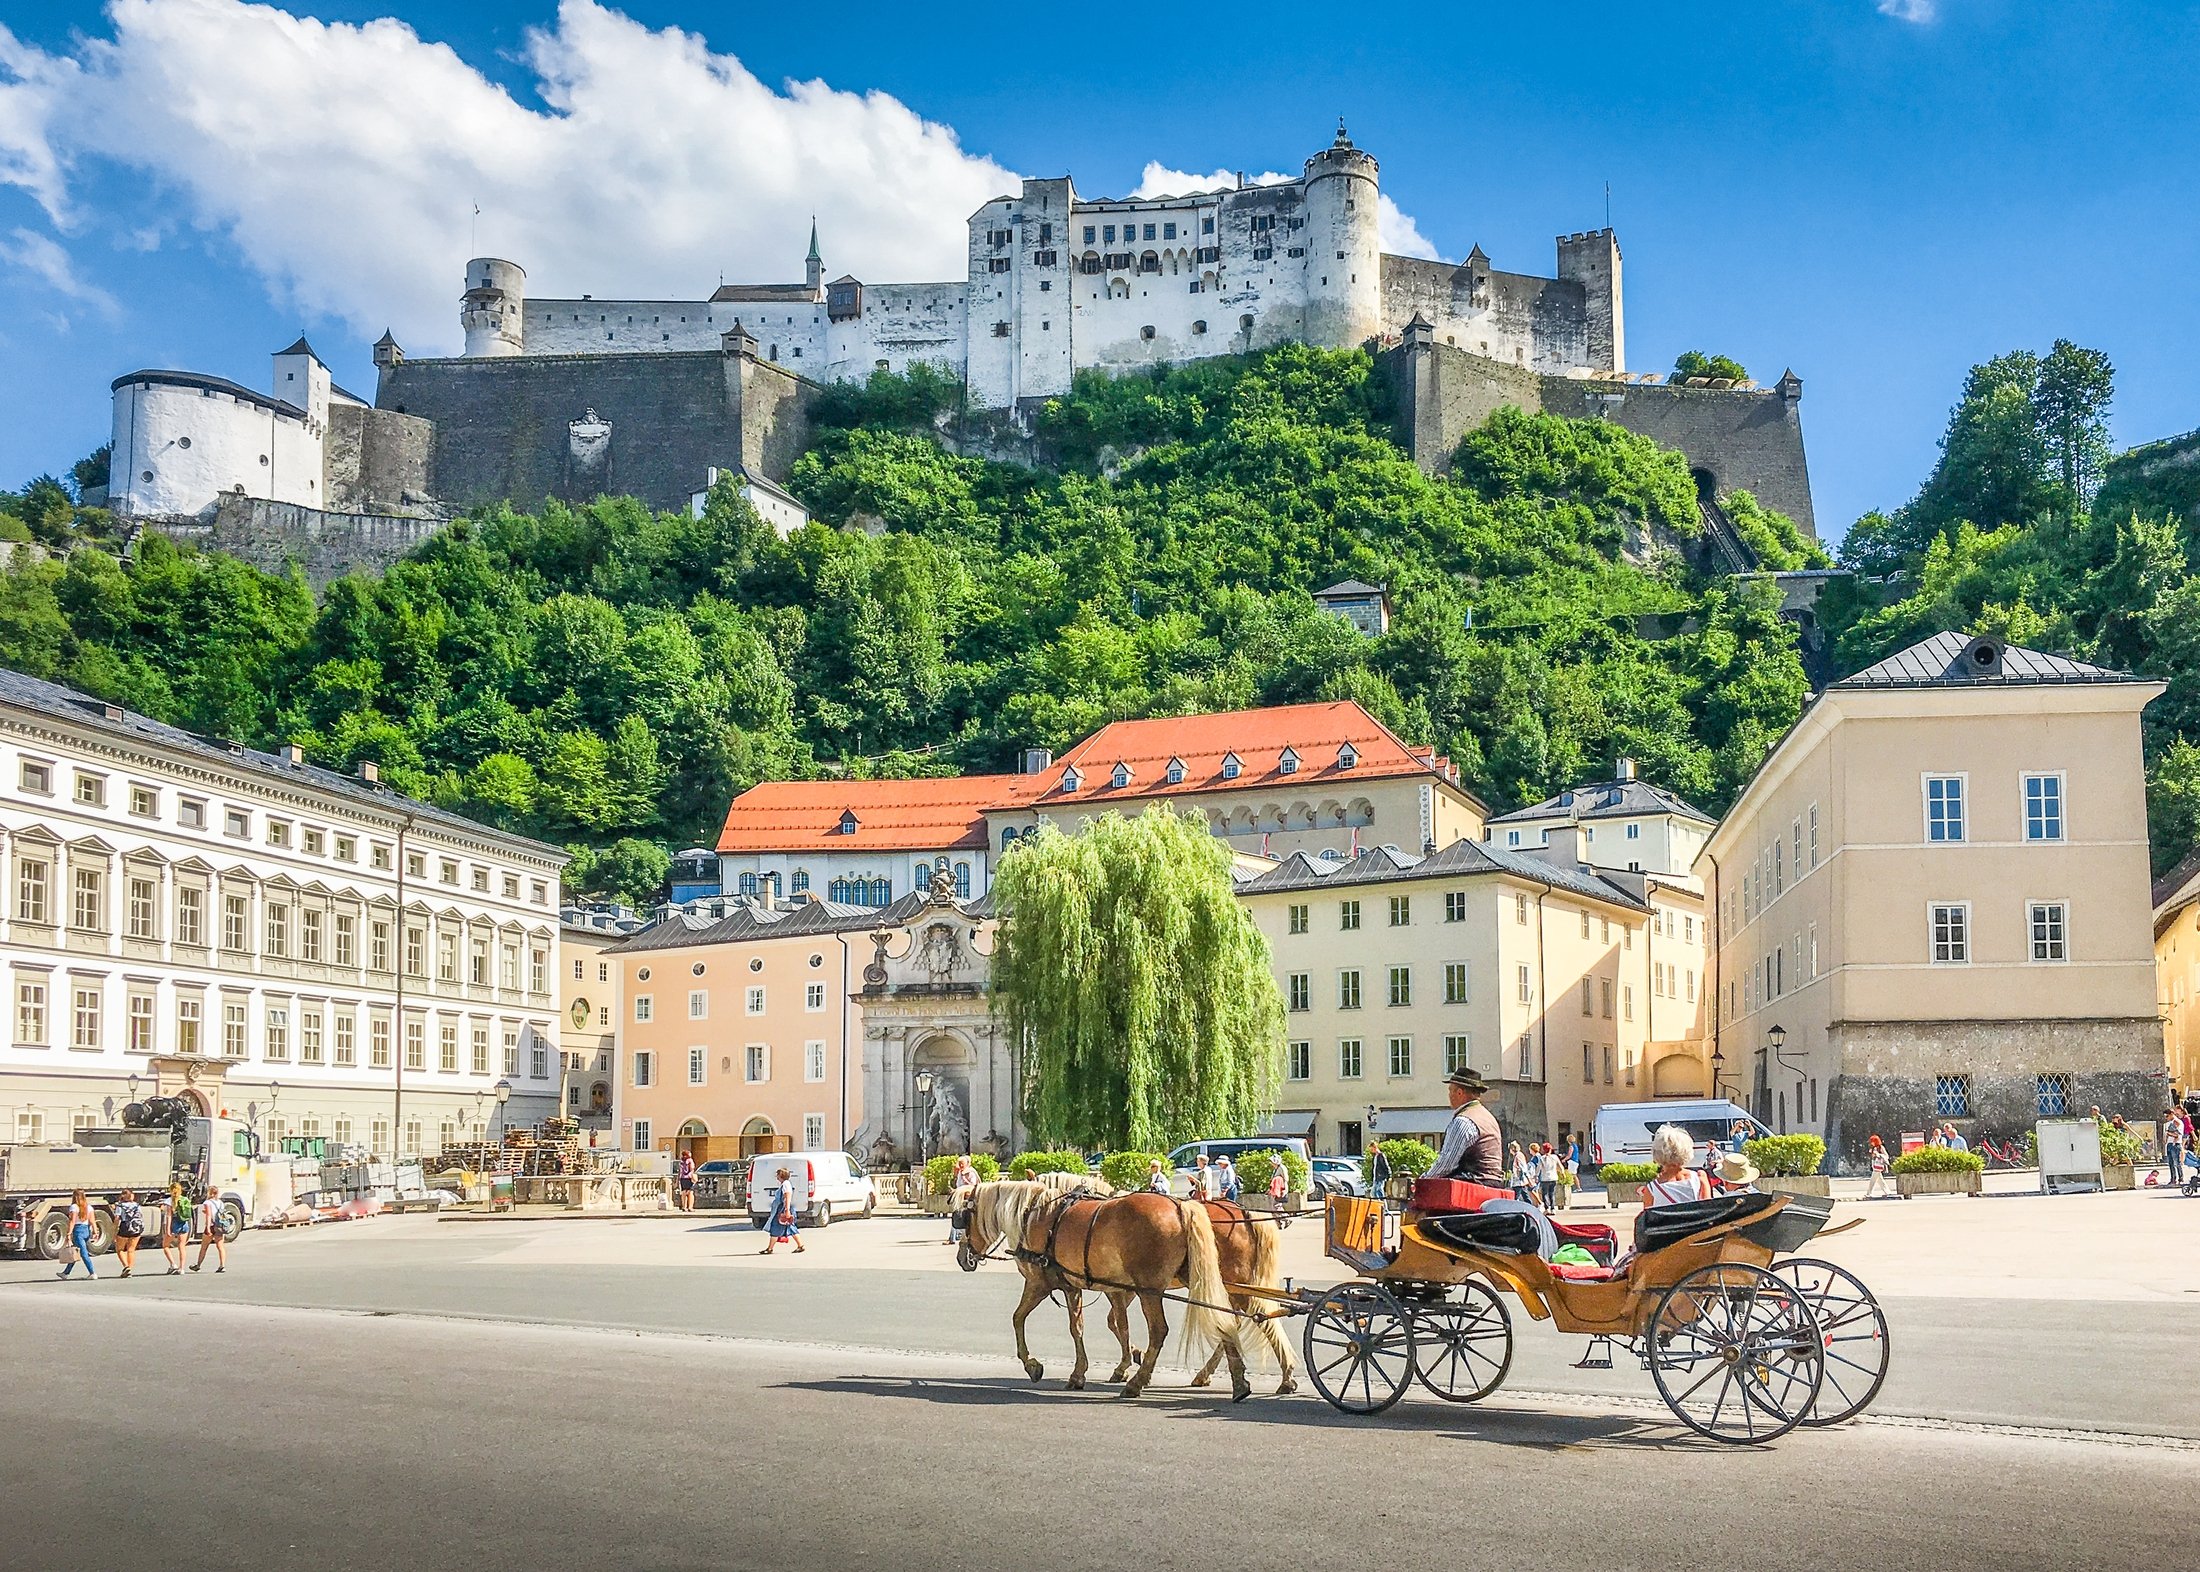 The Hohensalzburg Fortress as seen from a city street, in Salzburg, Austria. (Shutterstock Photo)